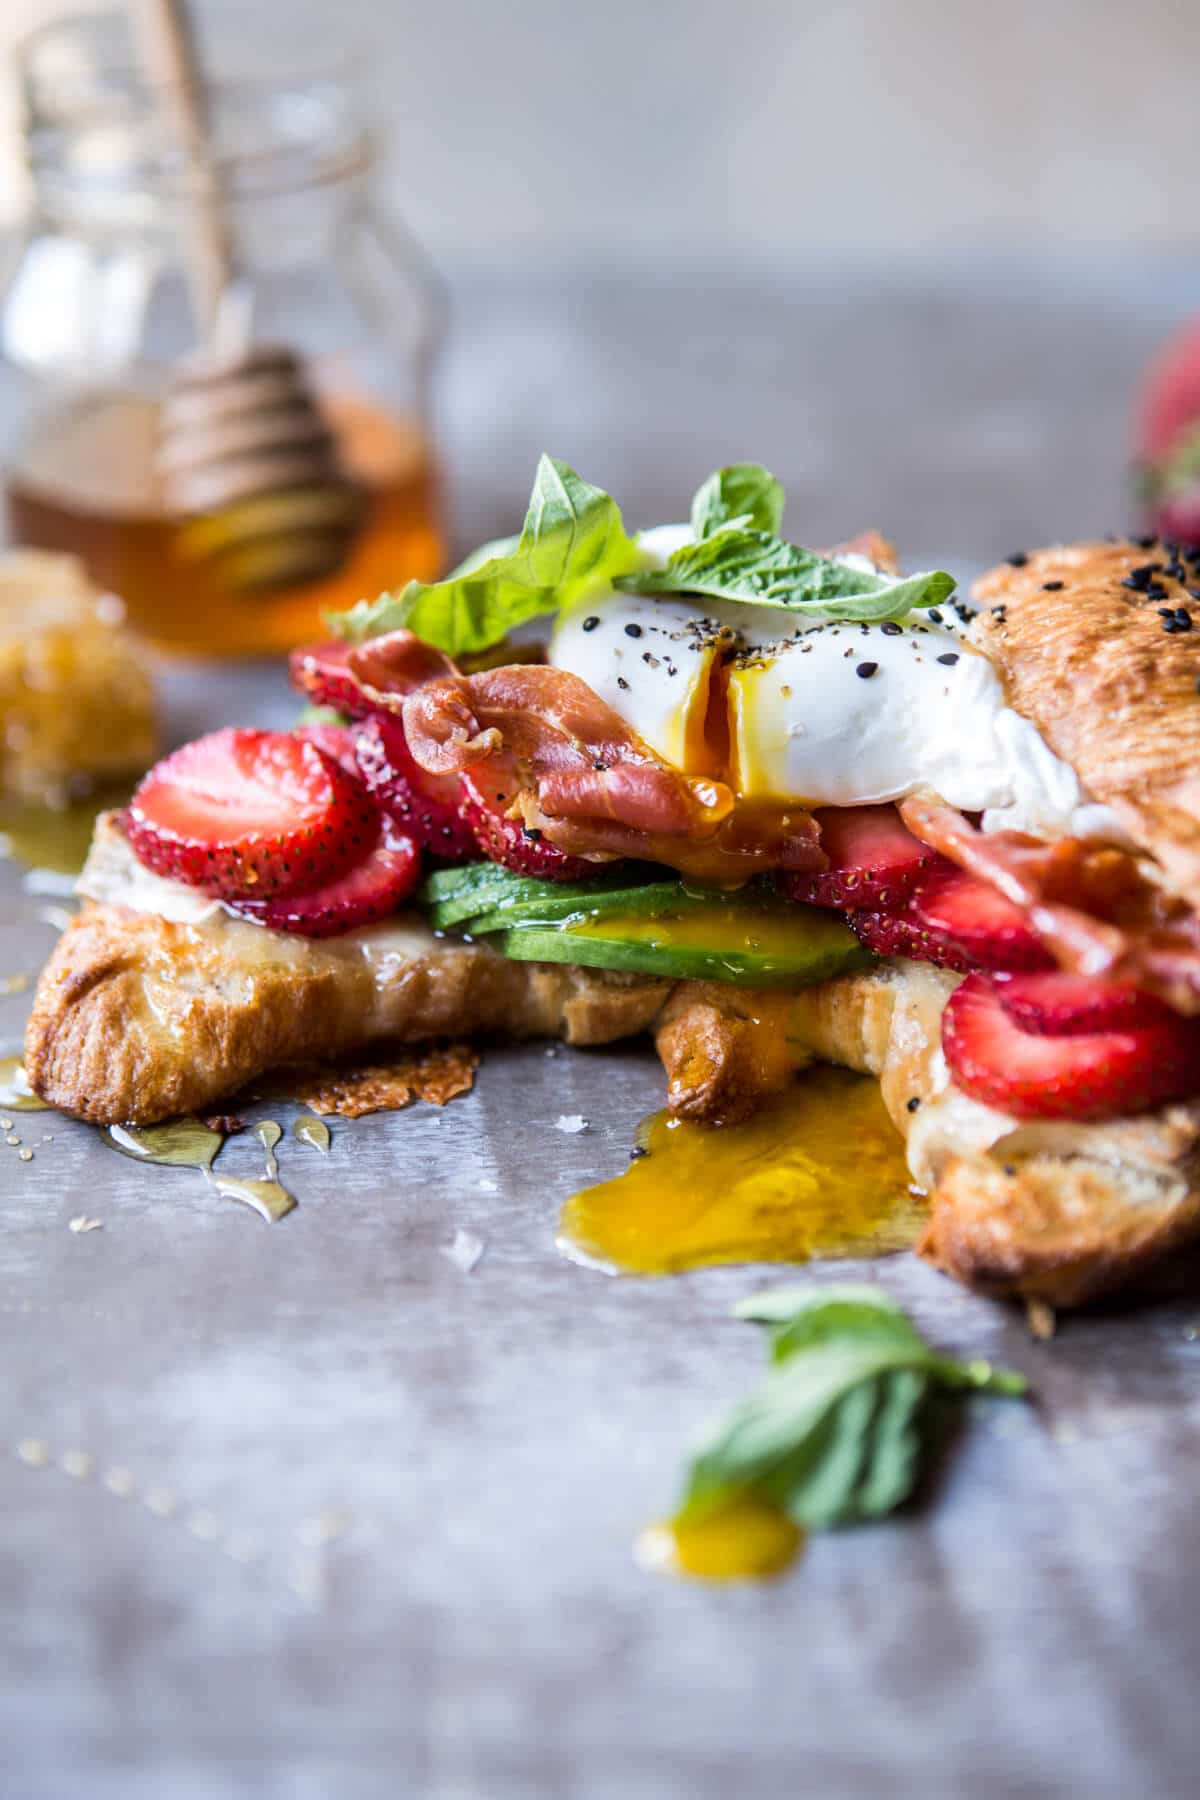 Strawberry, Basil and Crispy Prosciutto Breakfast Sandwich | halfbakedharvest.com @hbharvest